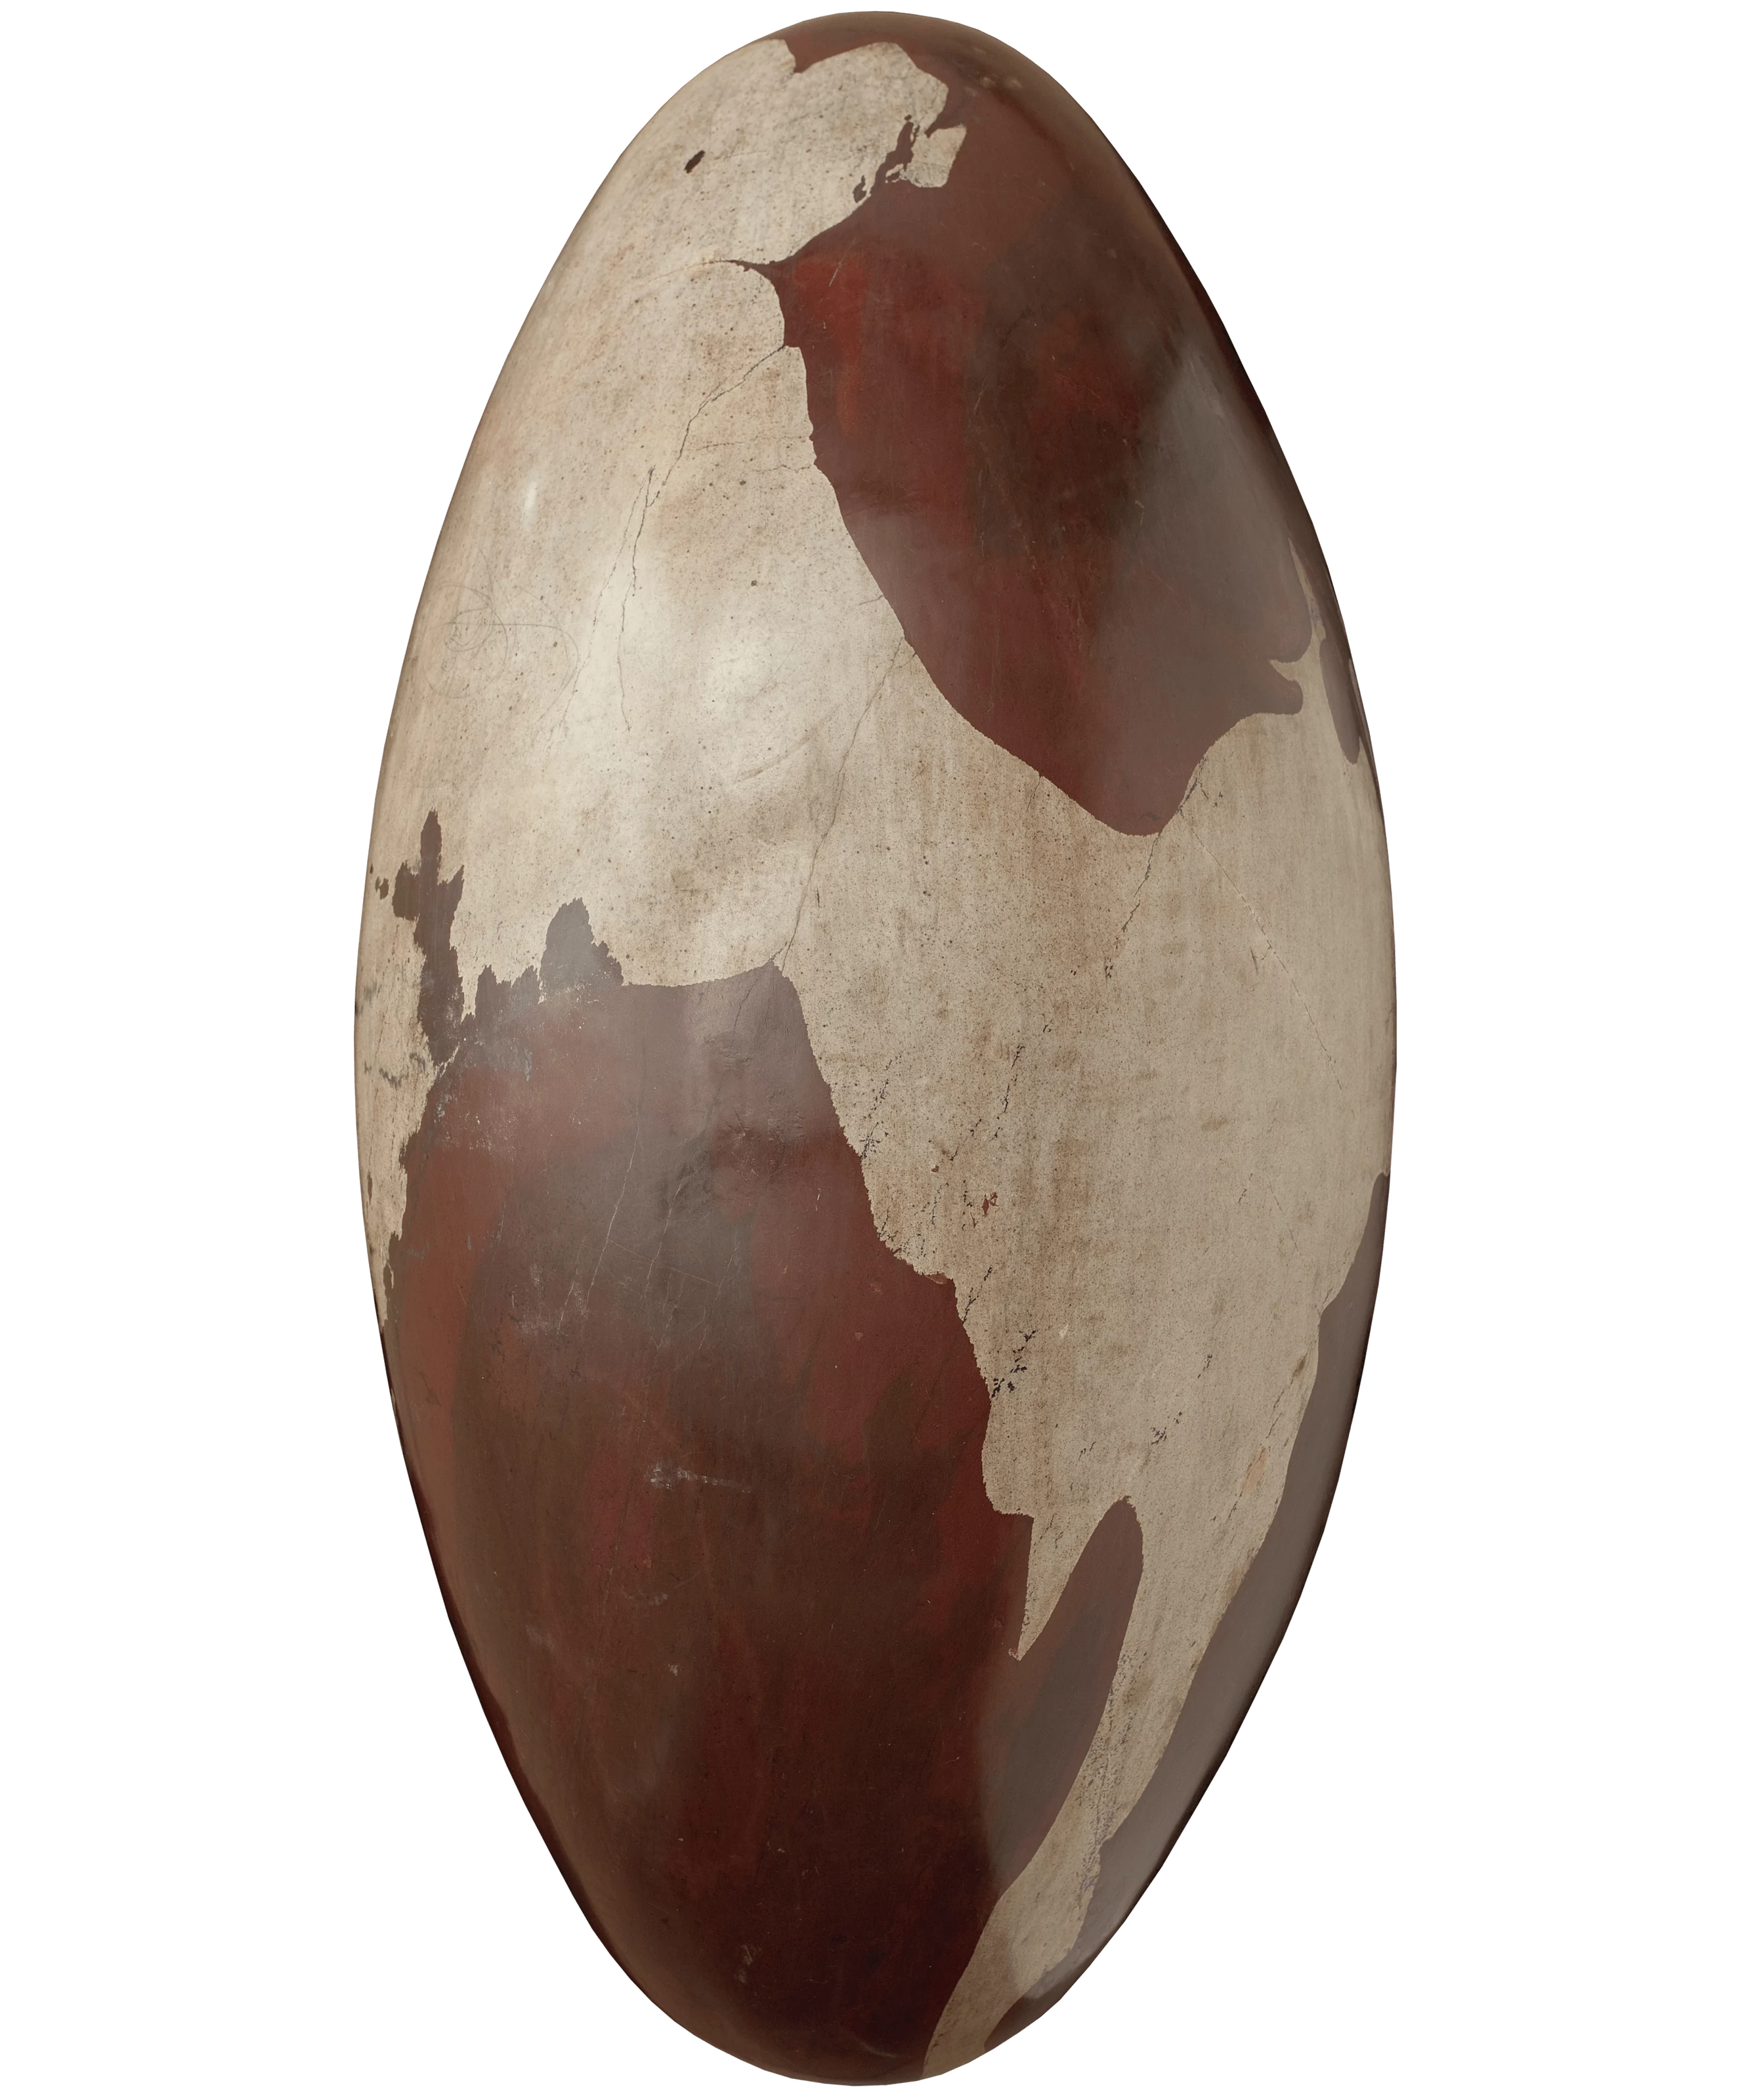 Lingam Stone, Natürlichekunst, or Natural Art